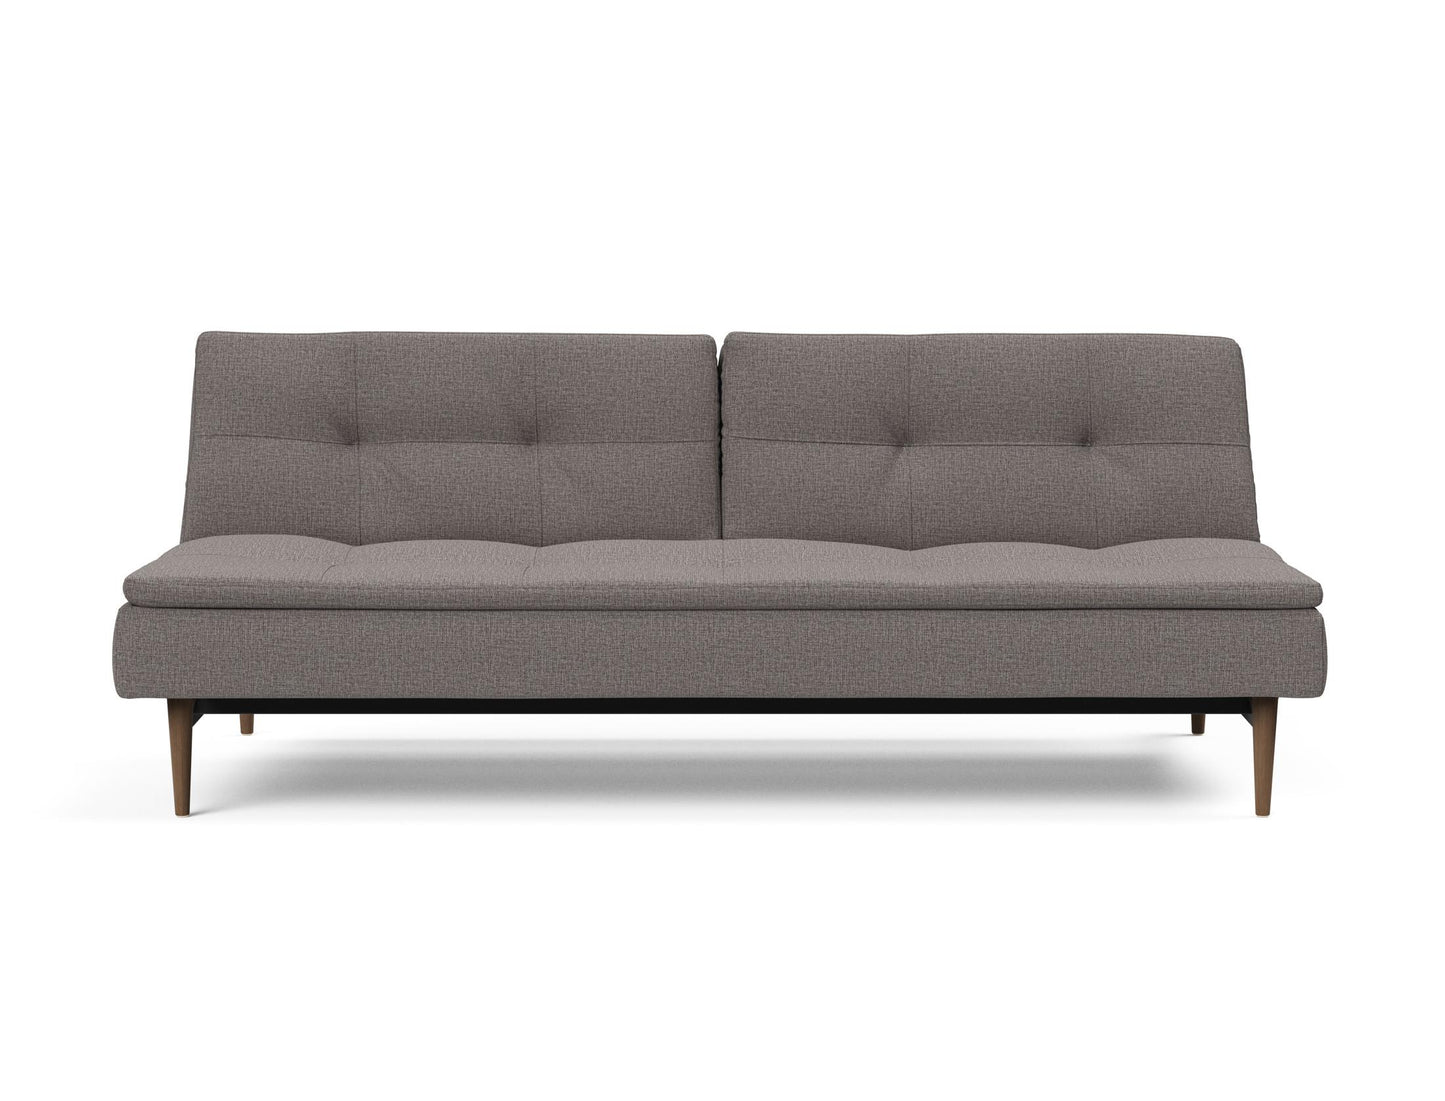 Dublexo Sofa with Dark Wood Legs